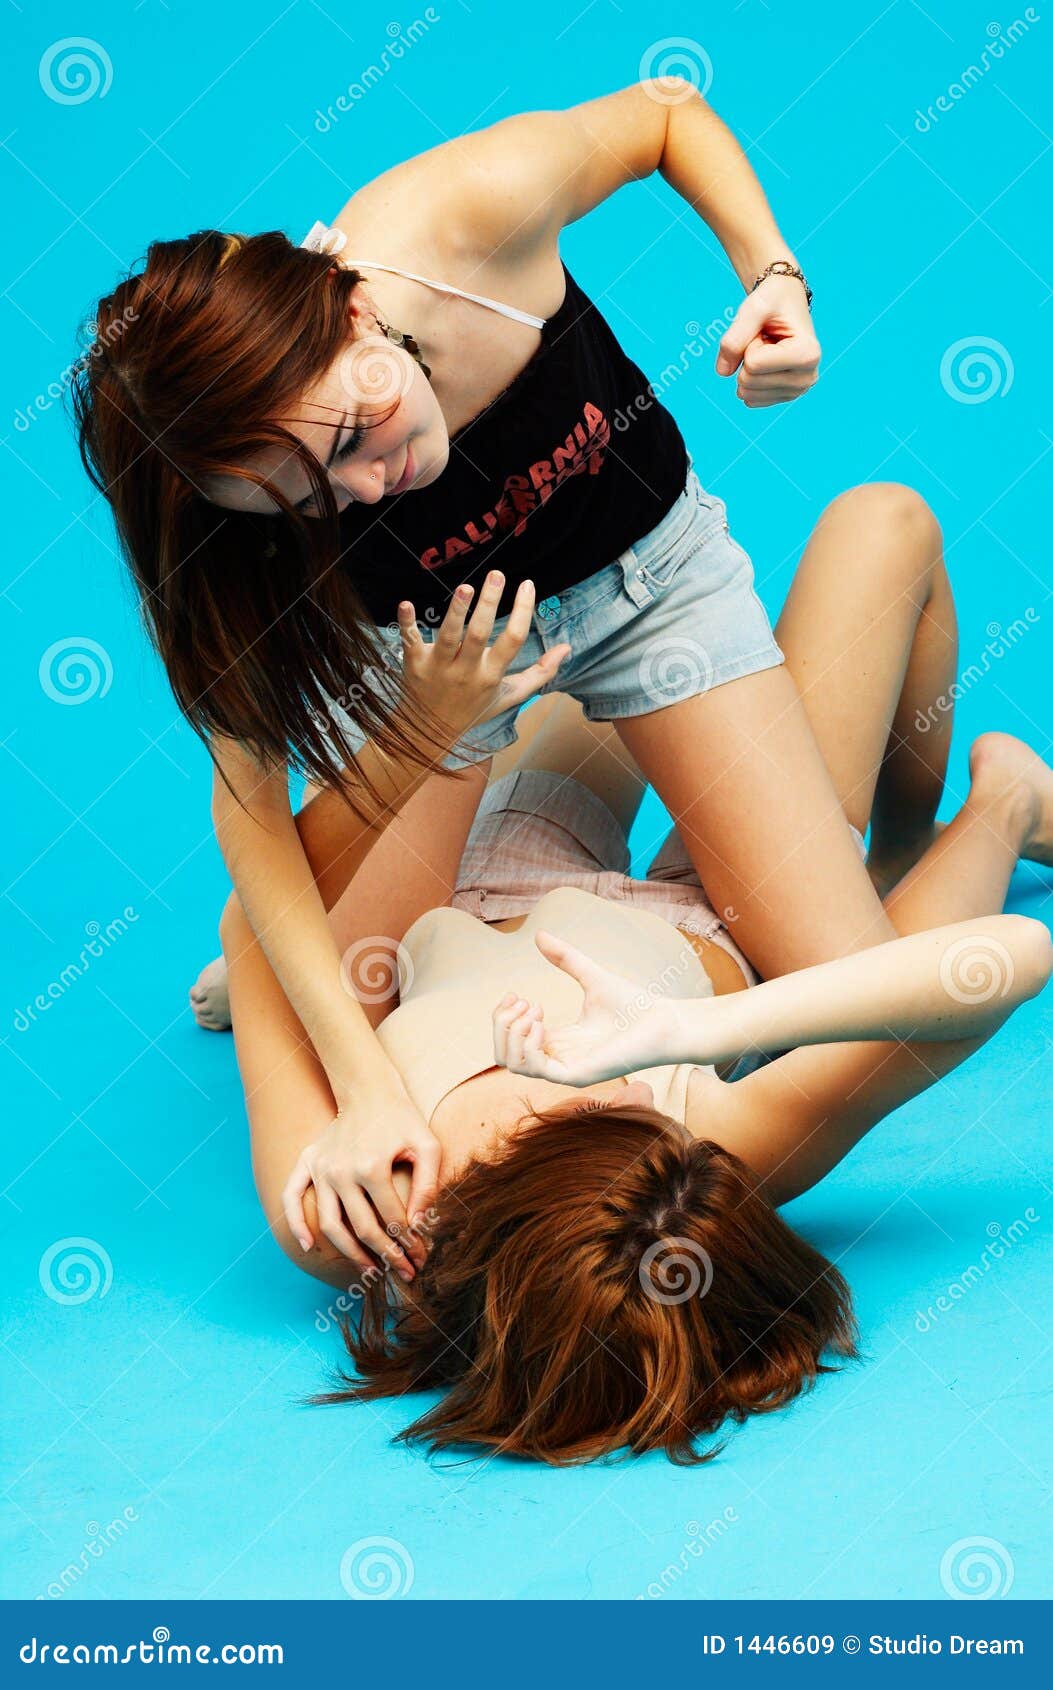 bruce mcgovern add photo girls wrestling on bed